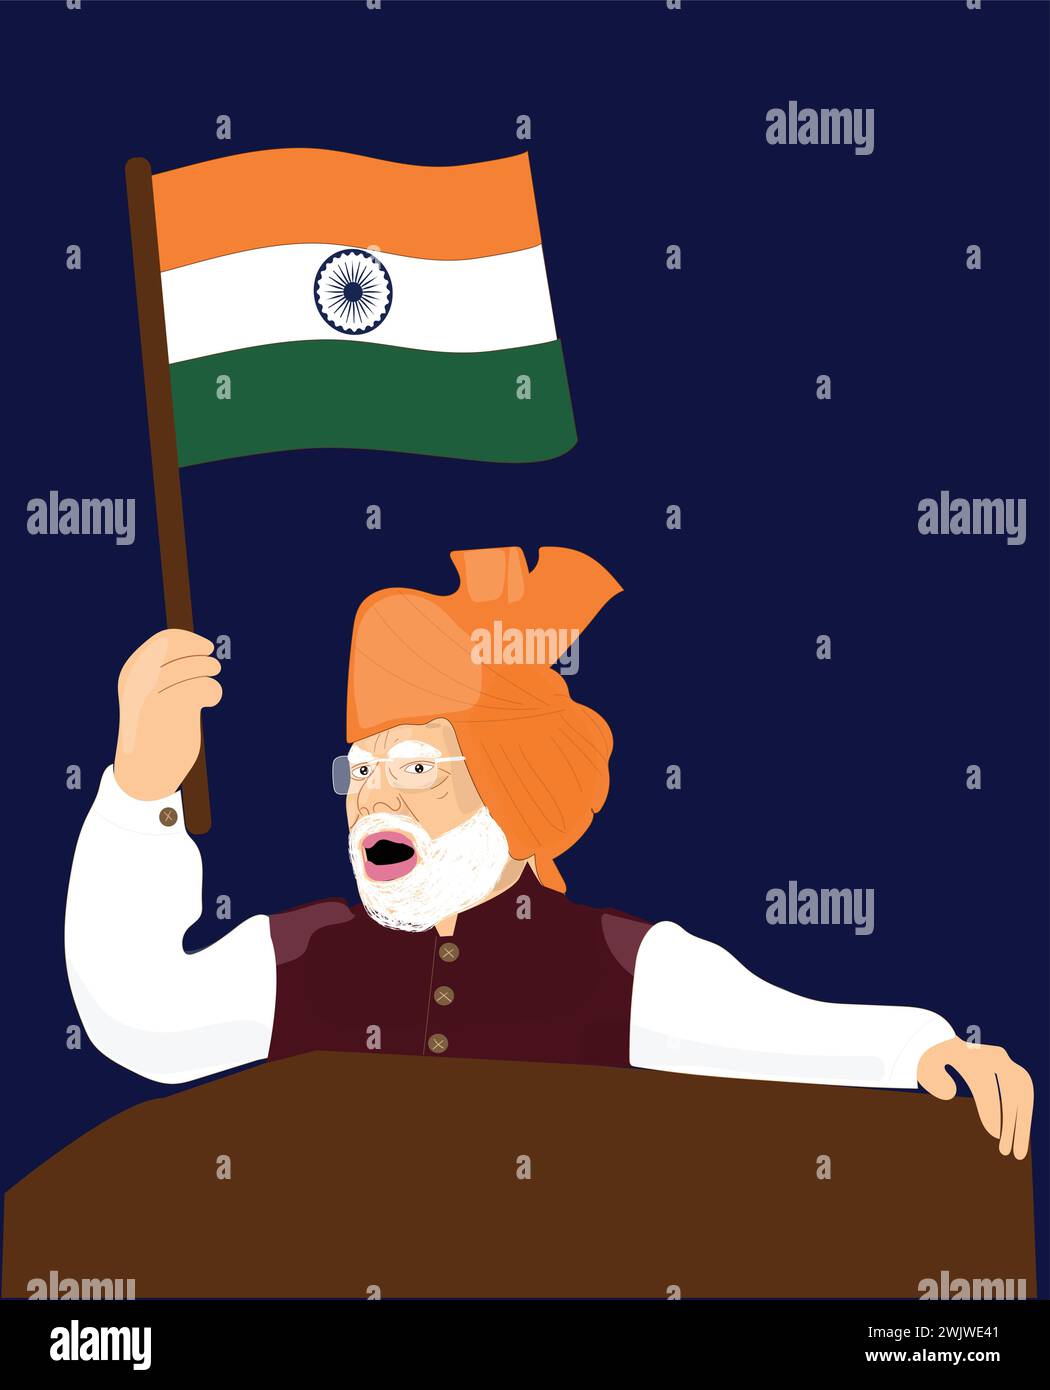 Narendra Modi Vector (premier ministre de l'Inde) Illustration de Vecteur